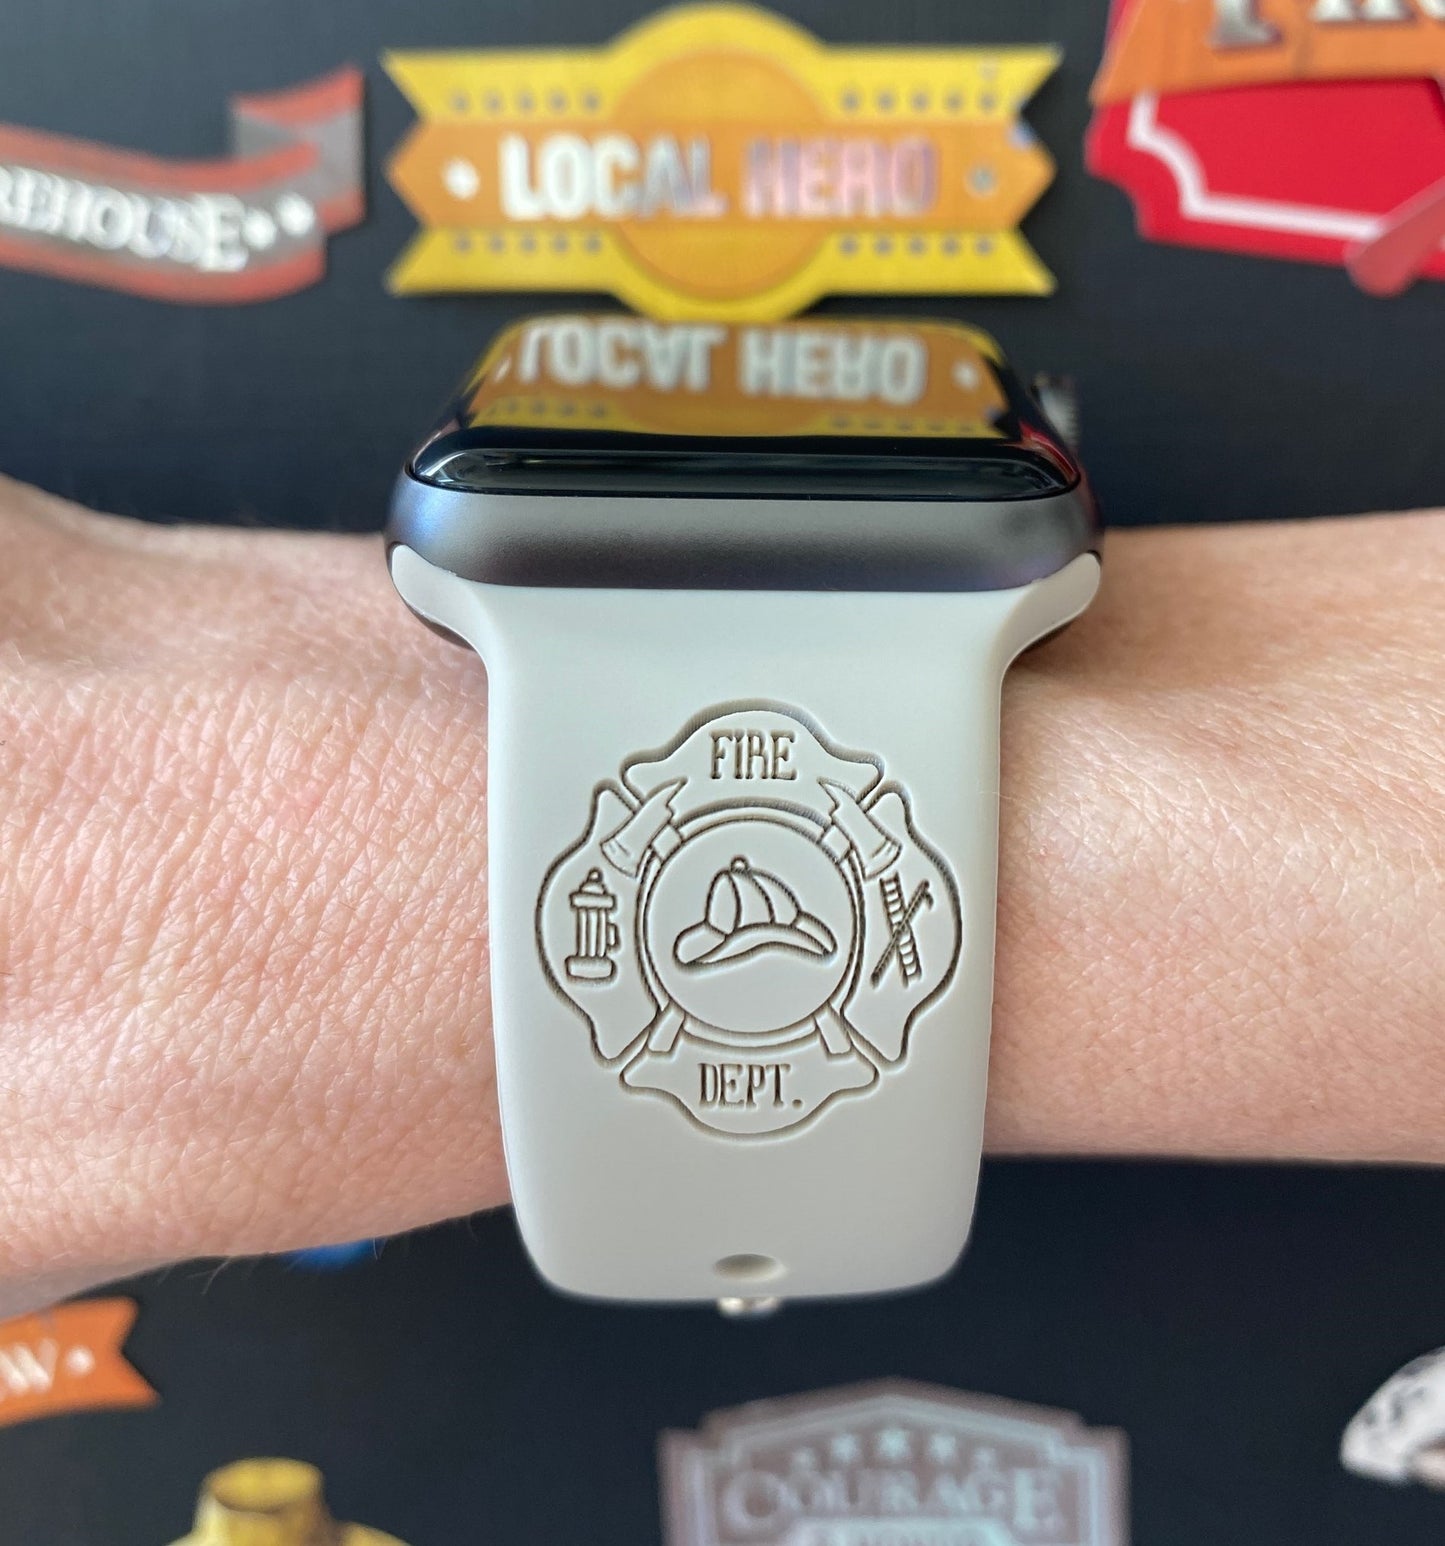 Firefighter Apple Watch Band